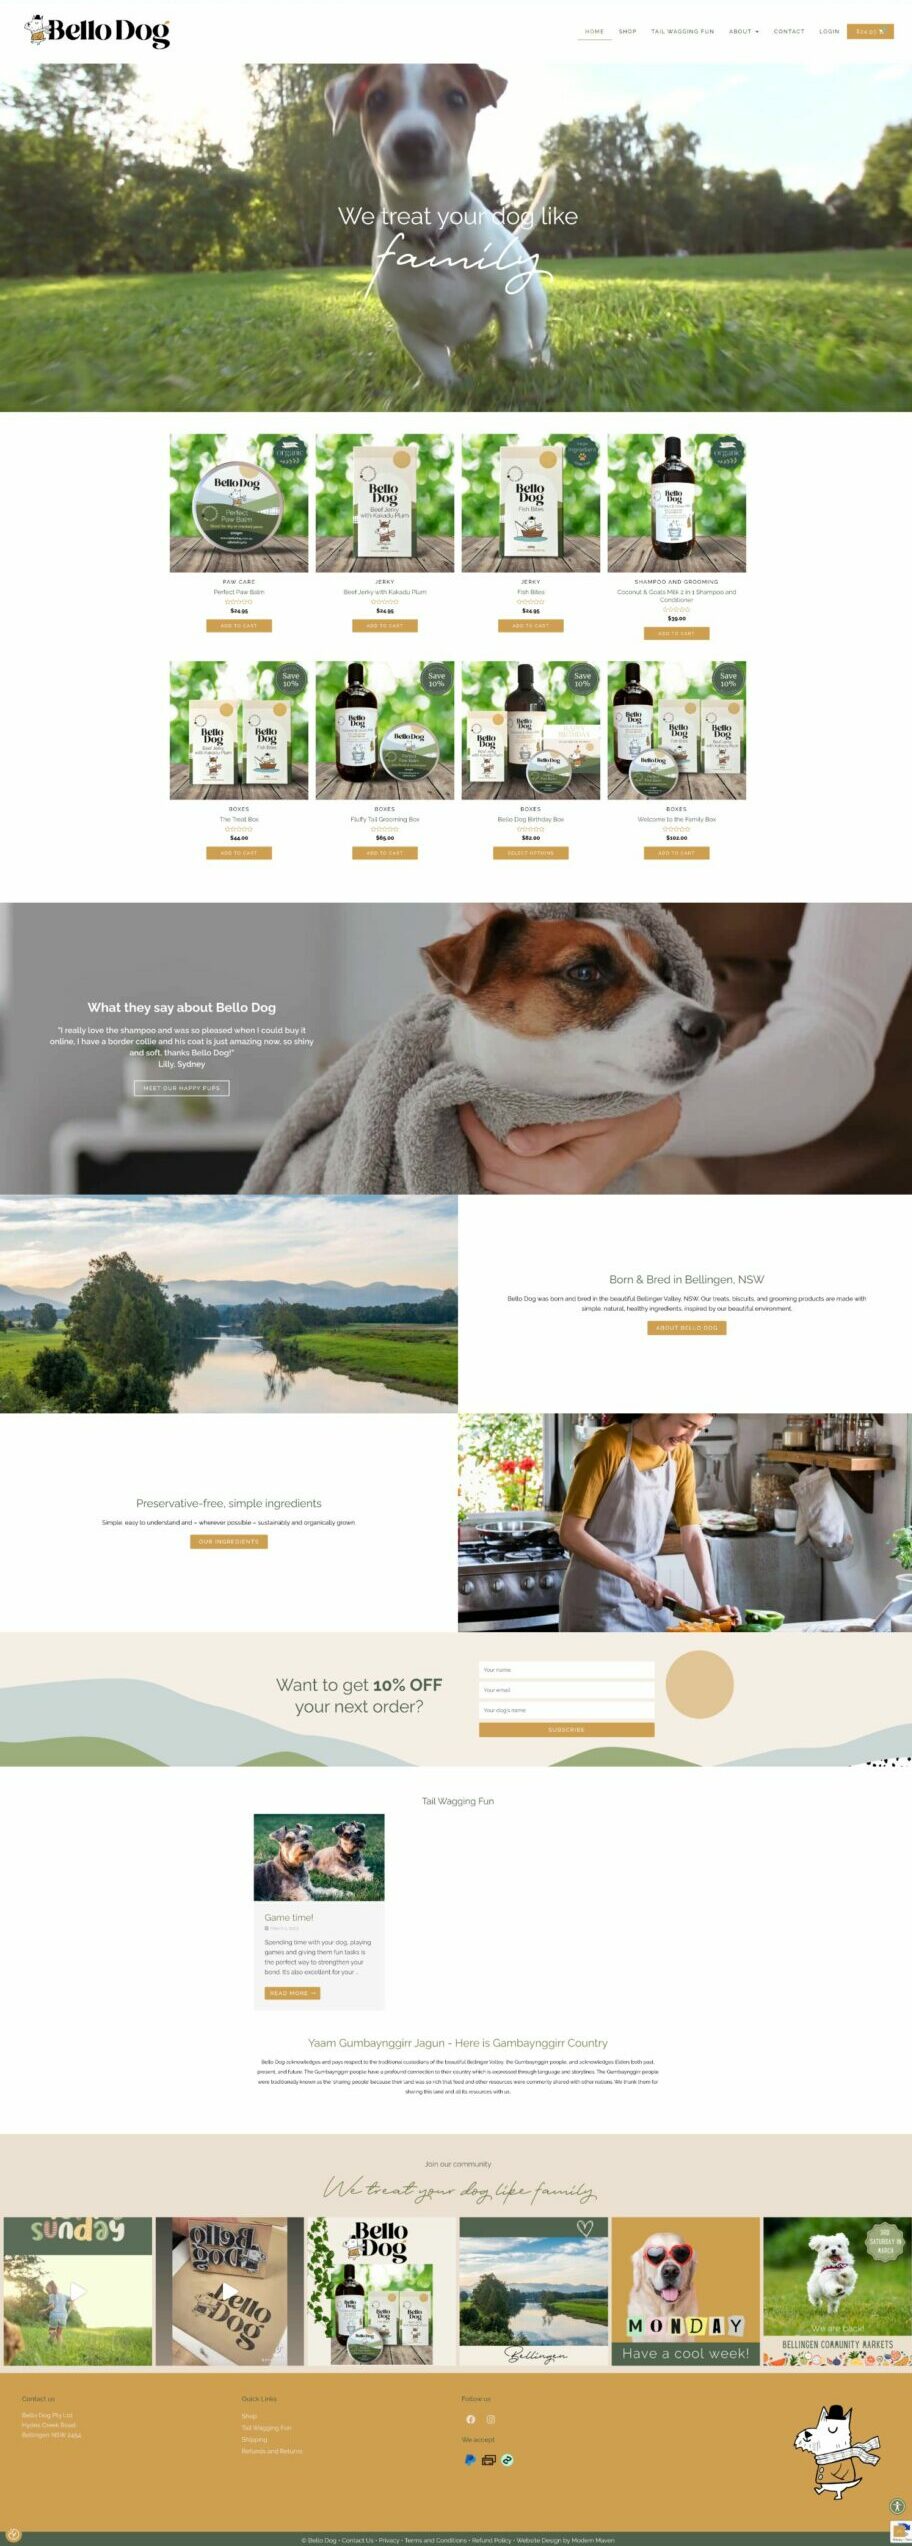 website design dog treat bello dog australian made